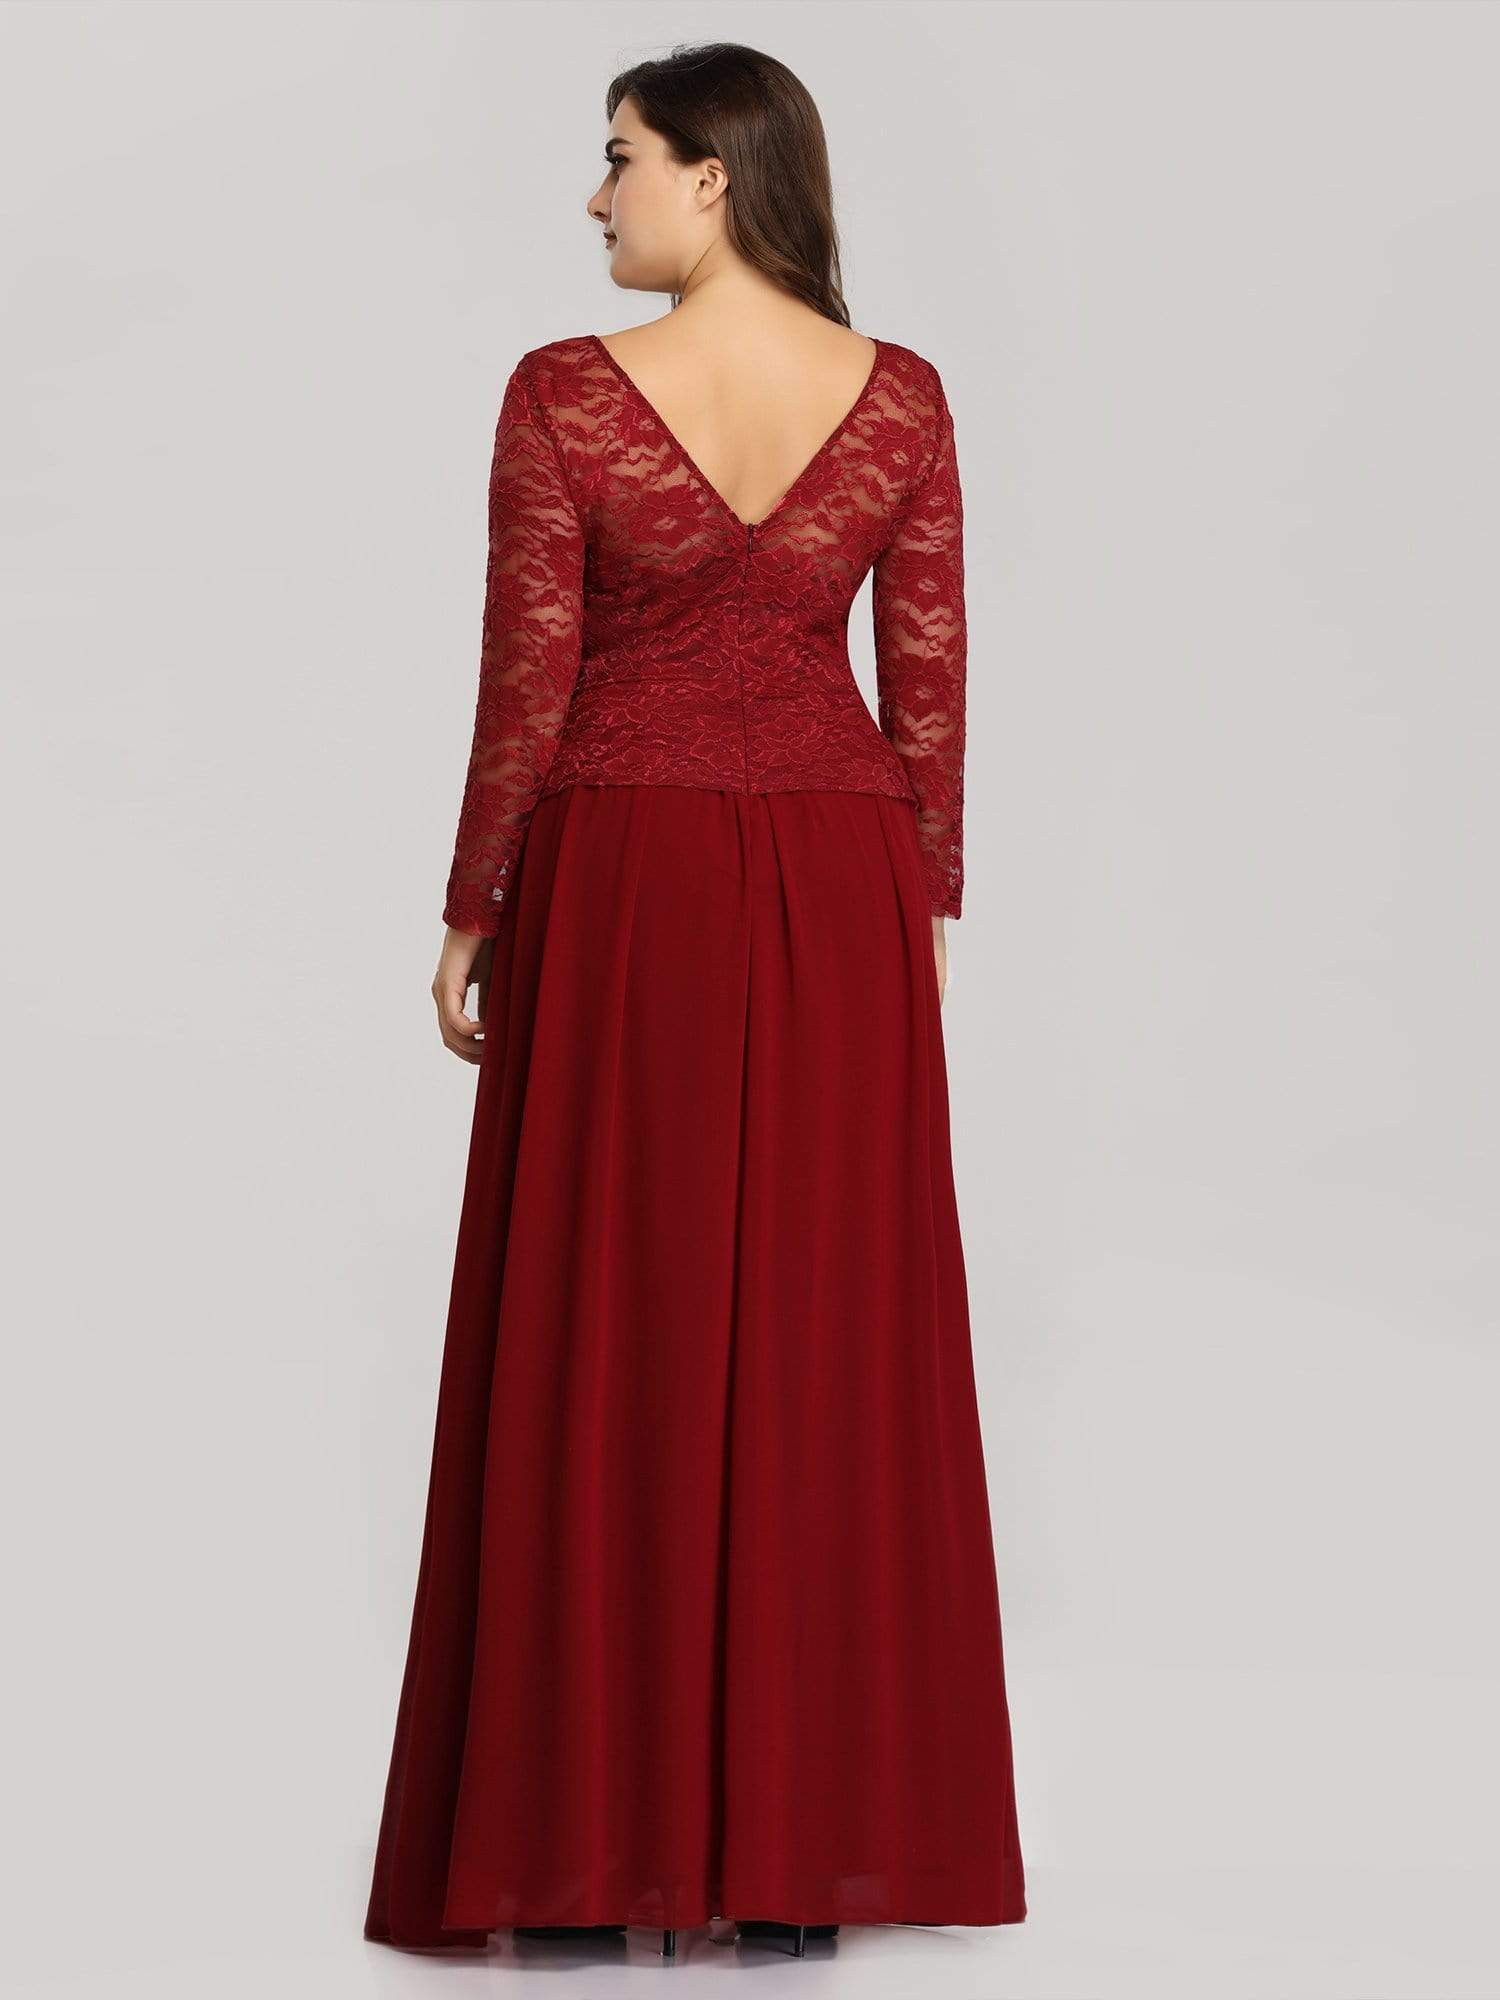 Elegant A Line Long Sleeve Lace Evening Dress For Women